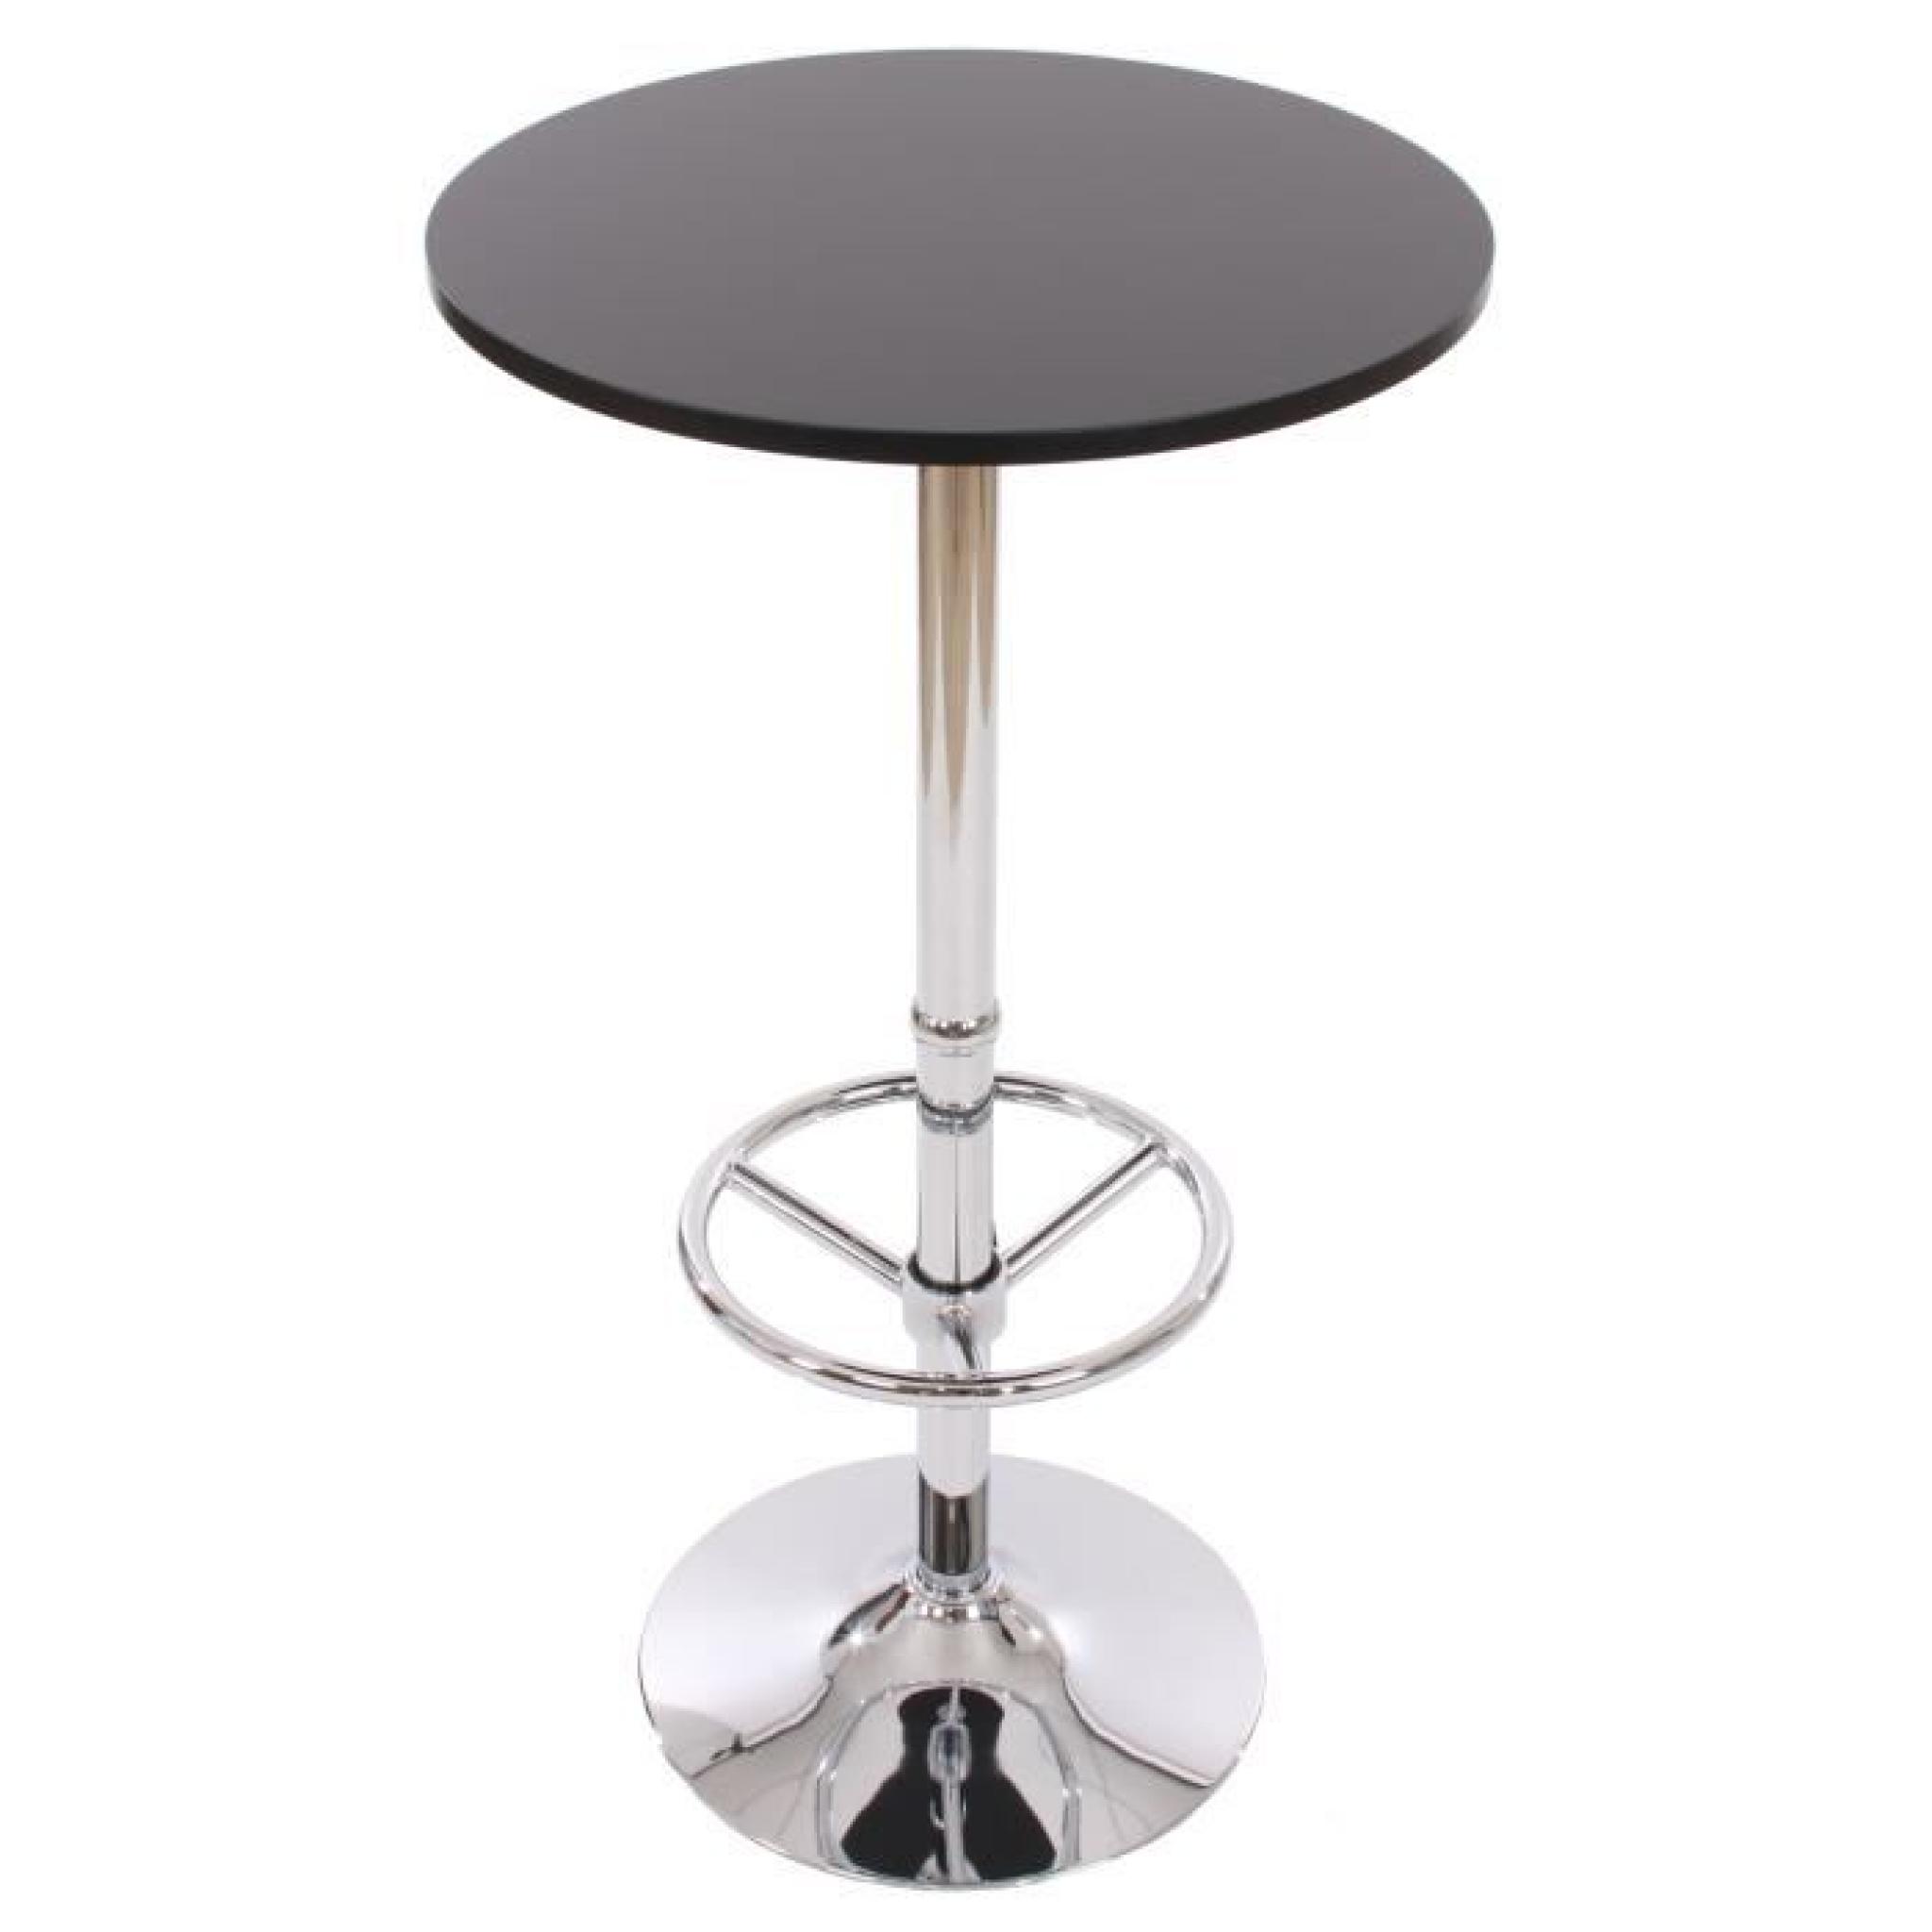 Table de bar / table haute Bari, ronde, avec repose-pied,109x60x60cm, noir.